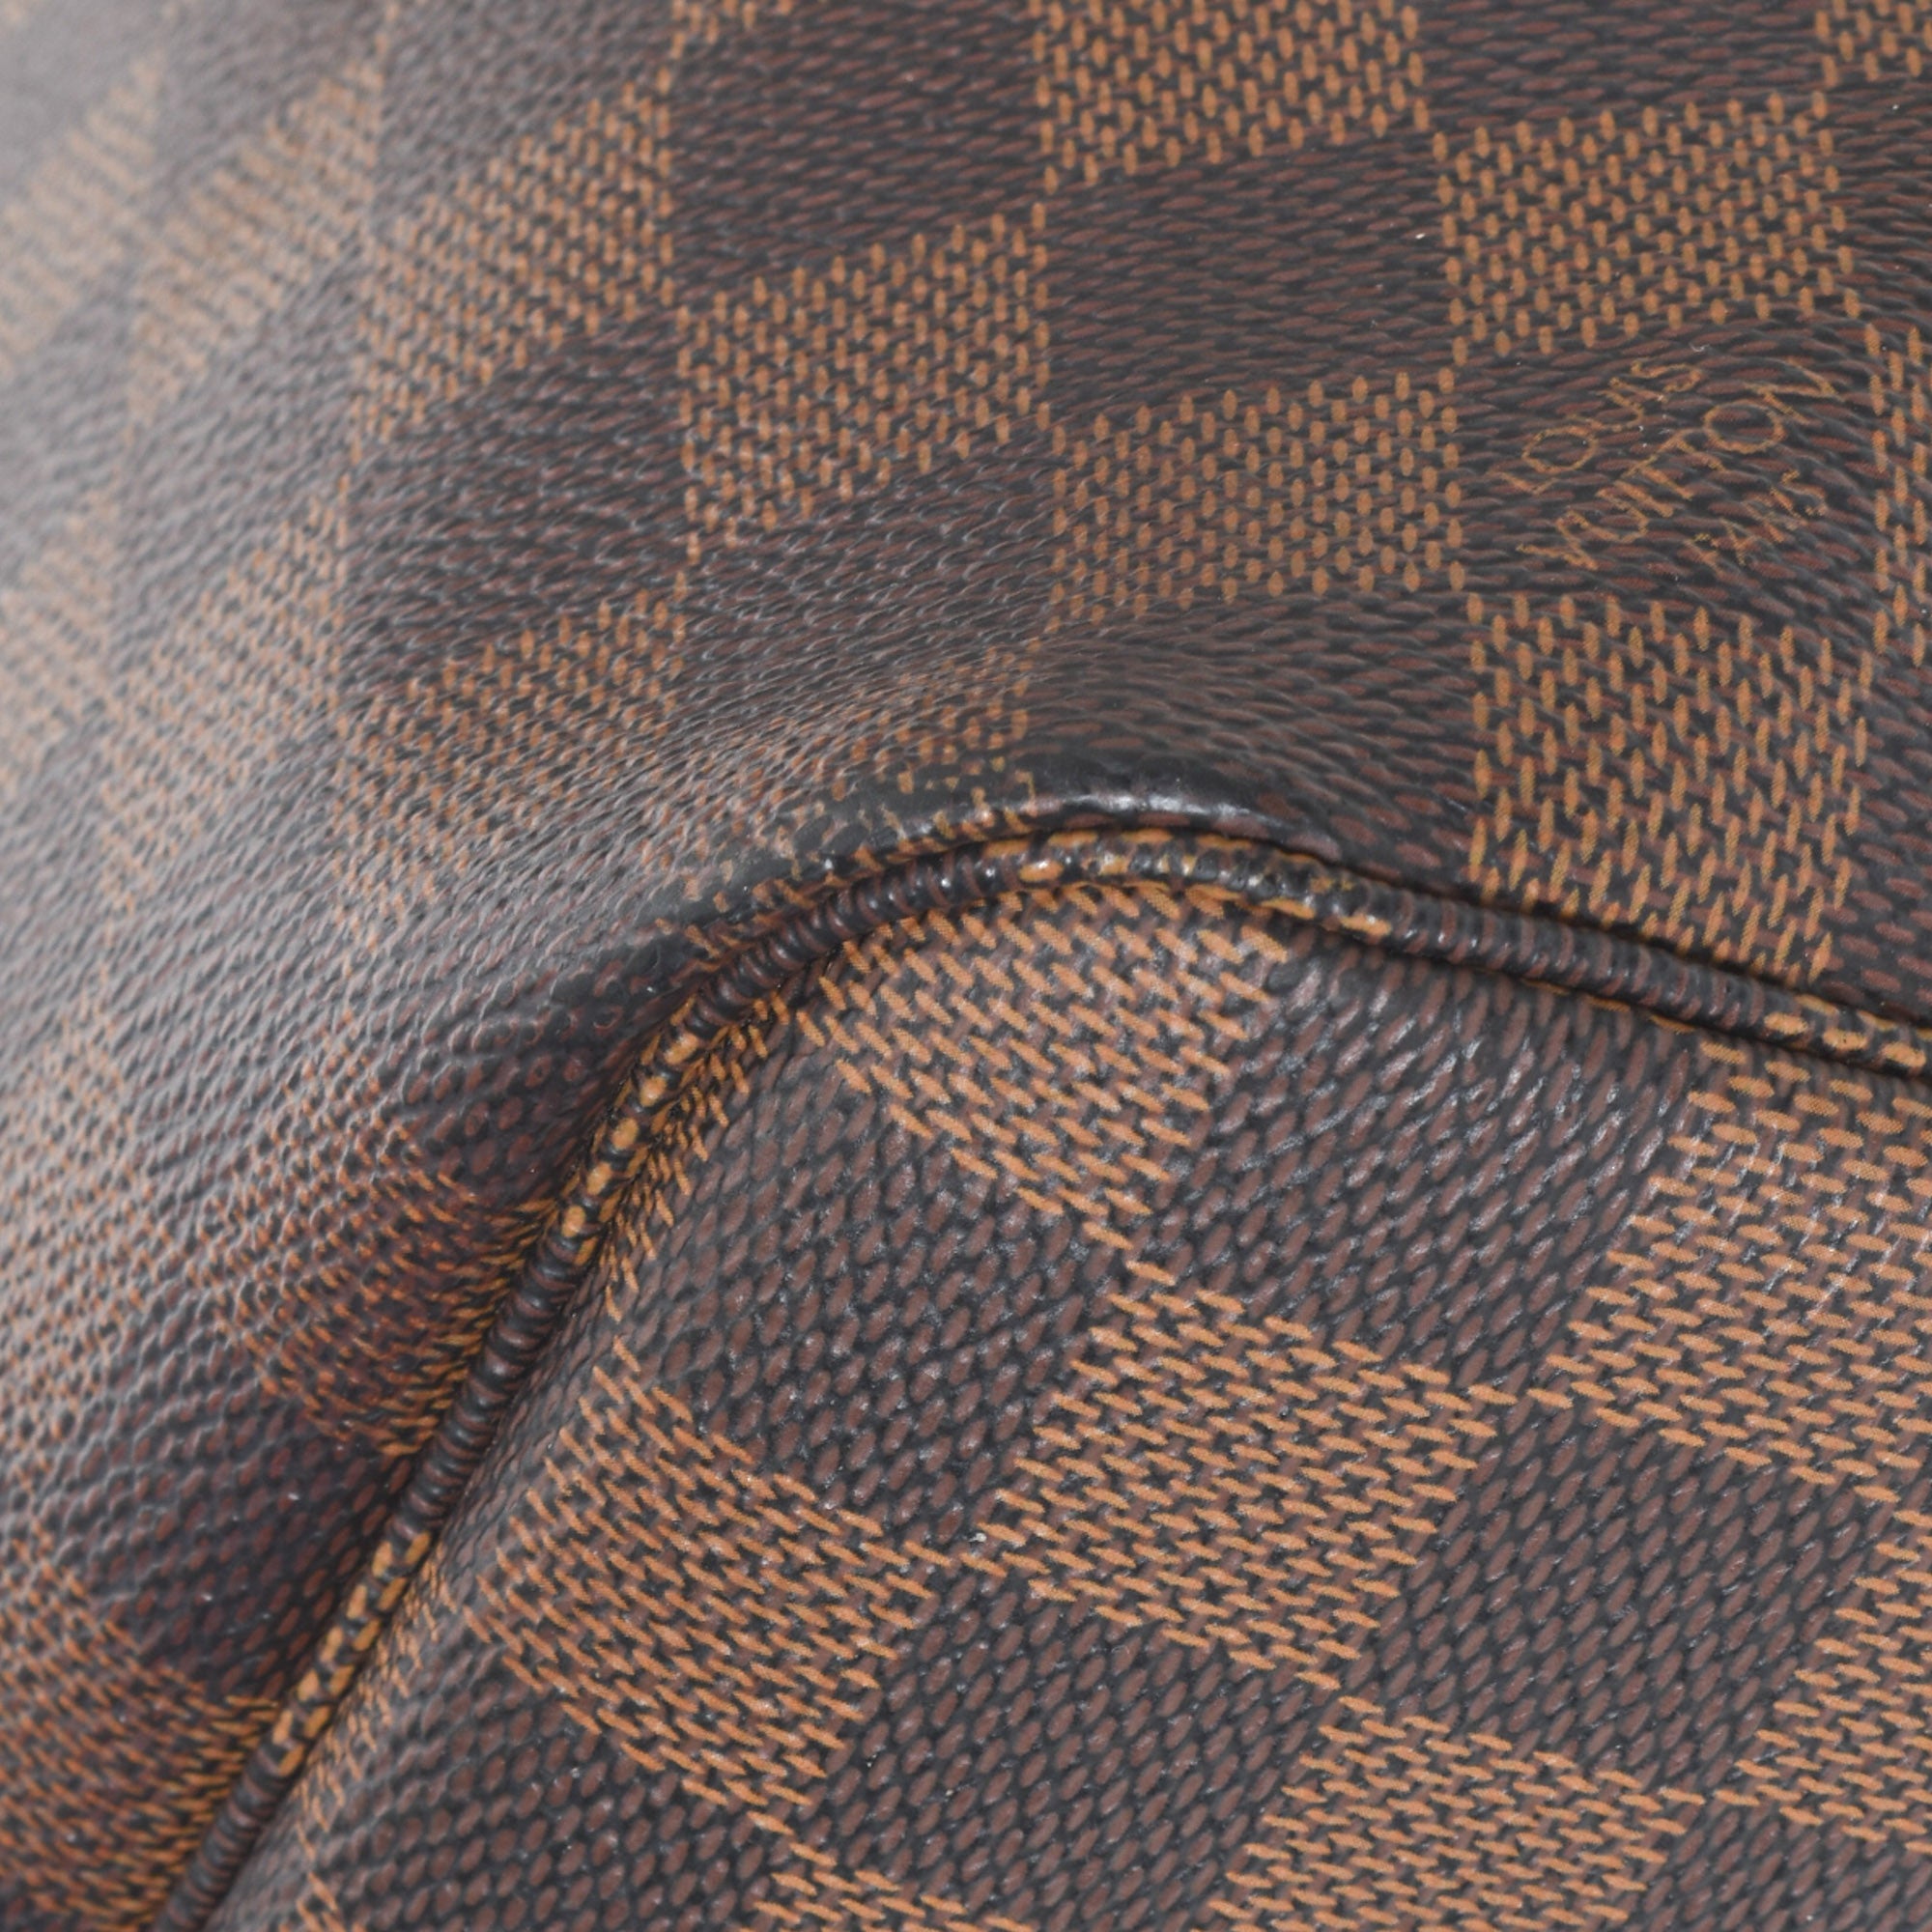 Louis Vuitton Neverfull PM Tote Handbag